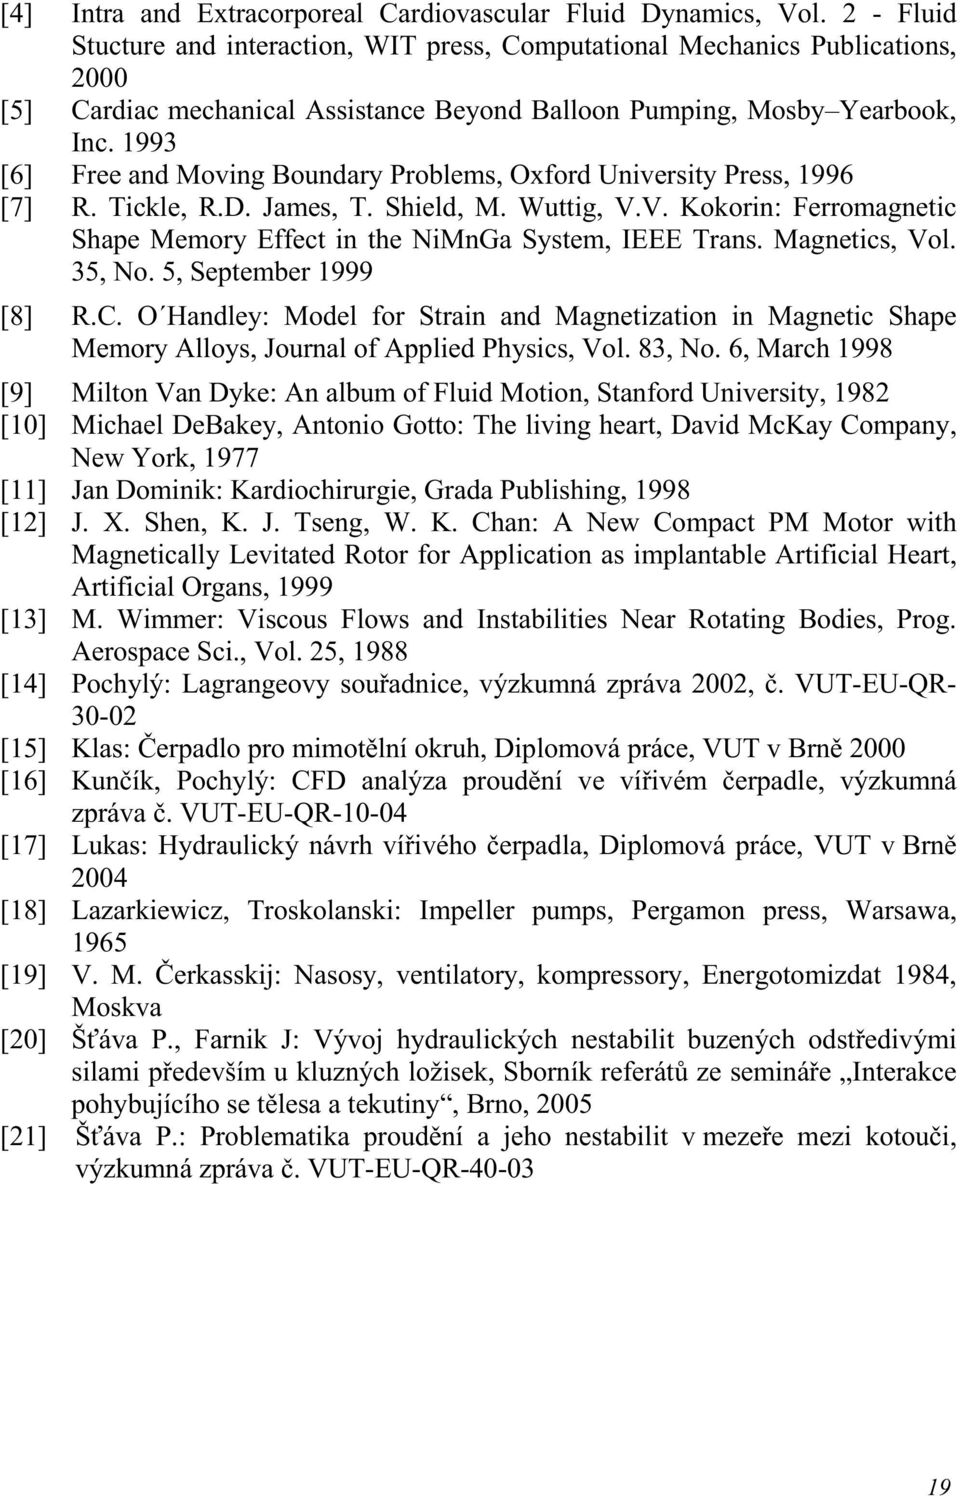 1993 [6] Free and Movng Boundary Problems, Oxford Unversty Press, 1996 [7] R. Tckle, R.D. James, T. Sheld, M. Wuttg, V.V. Kokorn: Ferromagnetc Shape Memory Effect n the NMnGa System, IEEE Trans.